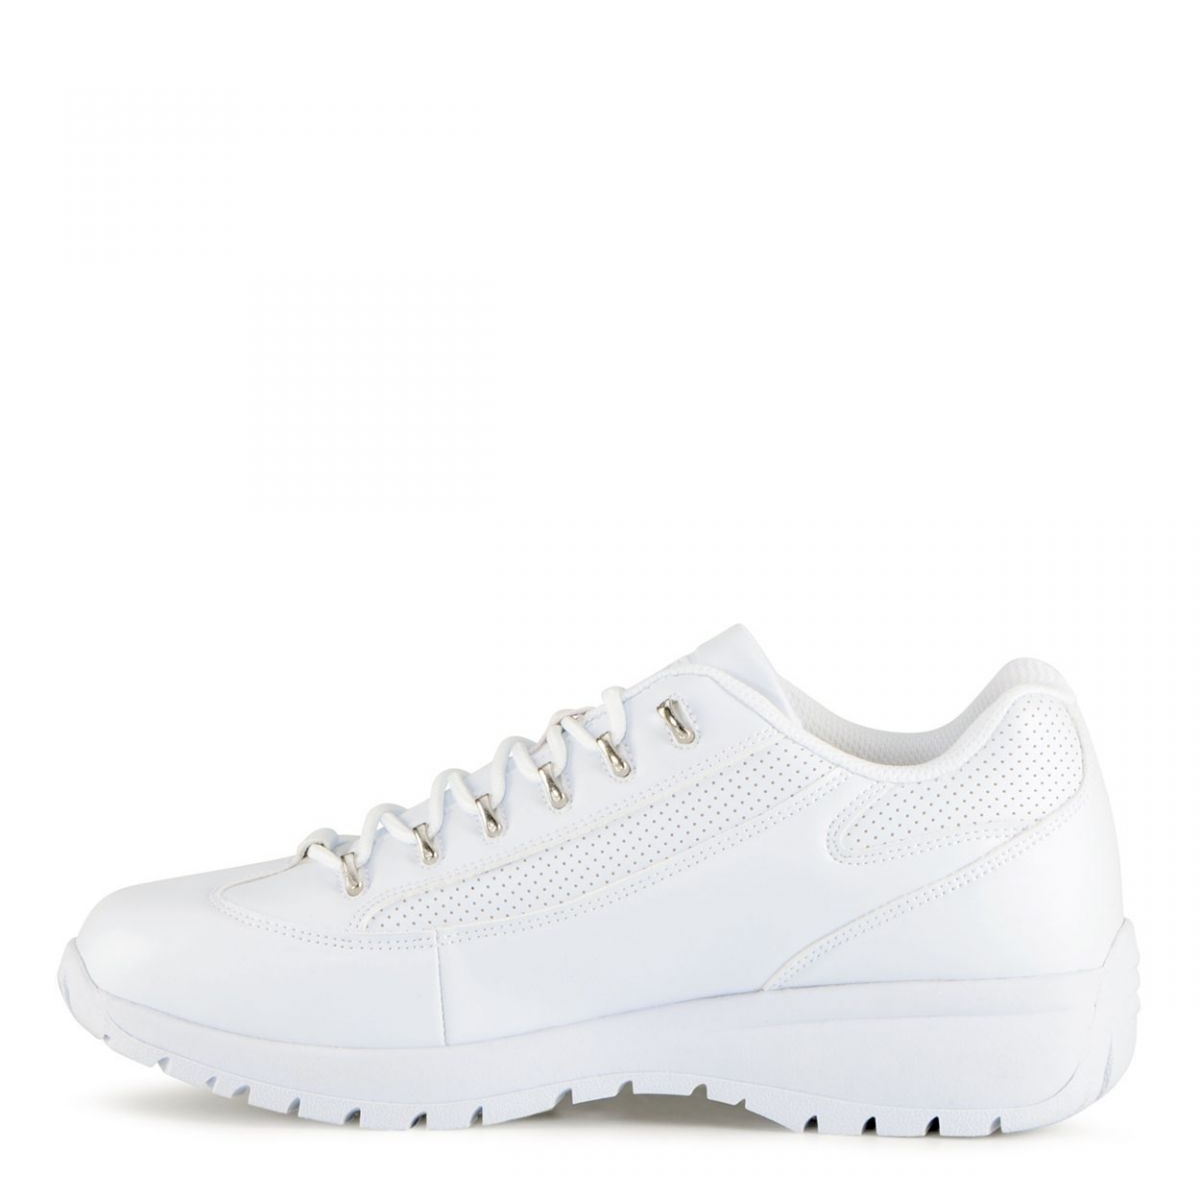 Lugz Men's Express Sneaker White - MEXPRSPV-100 WHITE - WHITE, 12